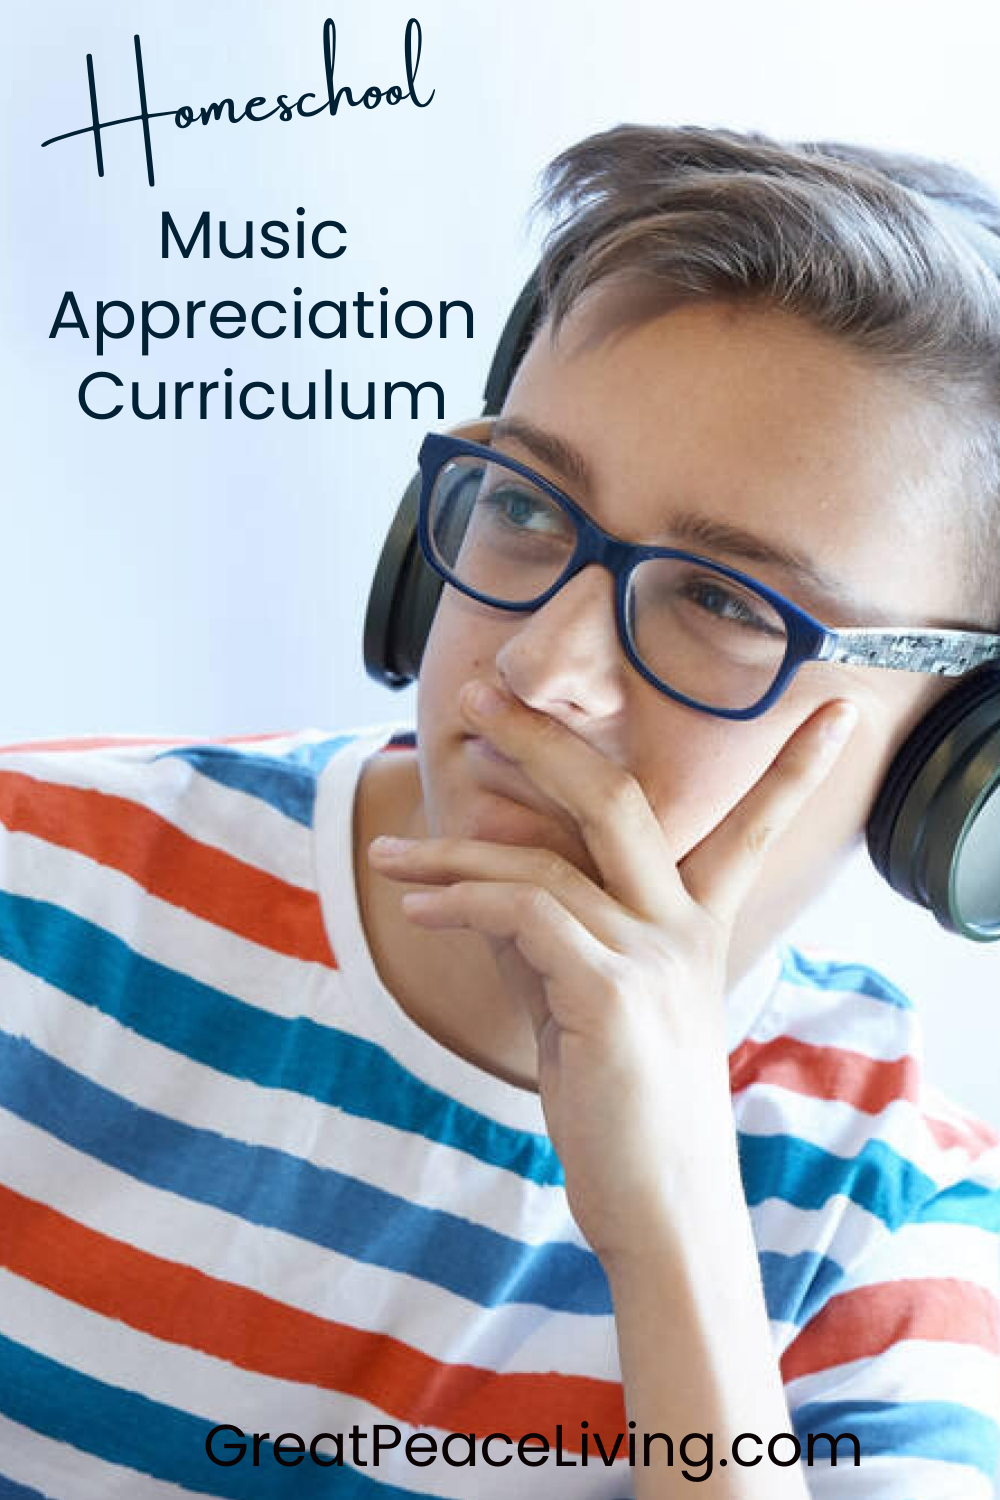 Top 10 Music Appreciation Curricula for Homeschoolers